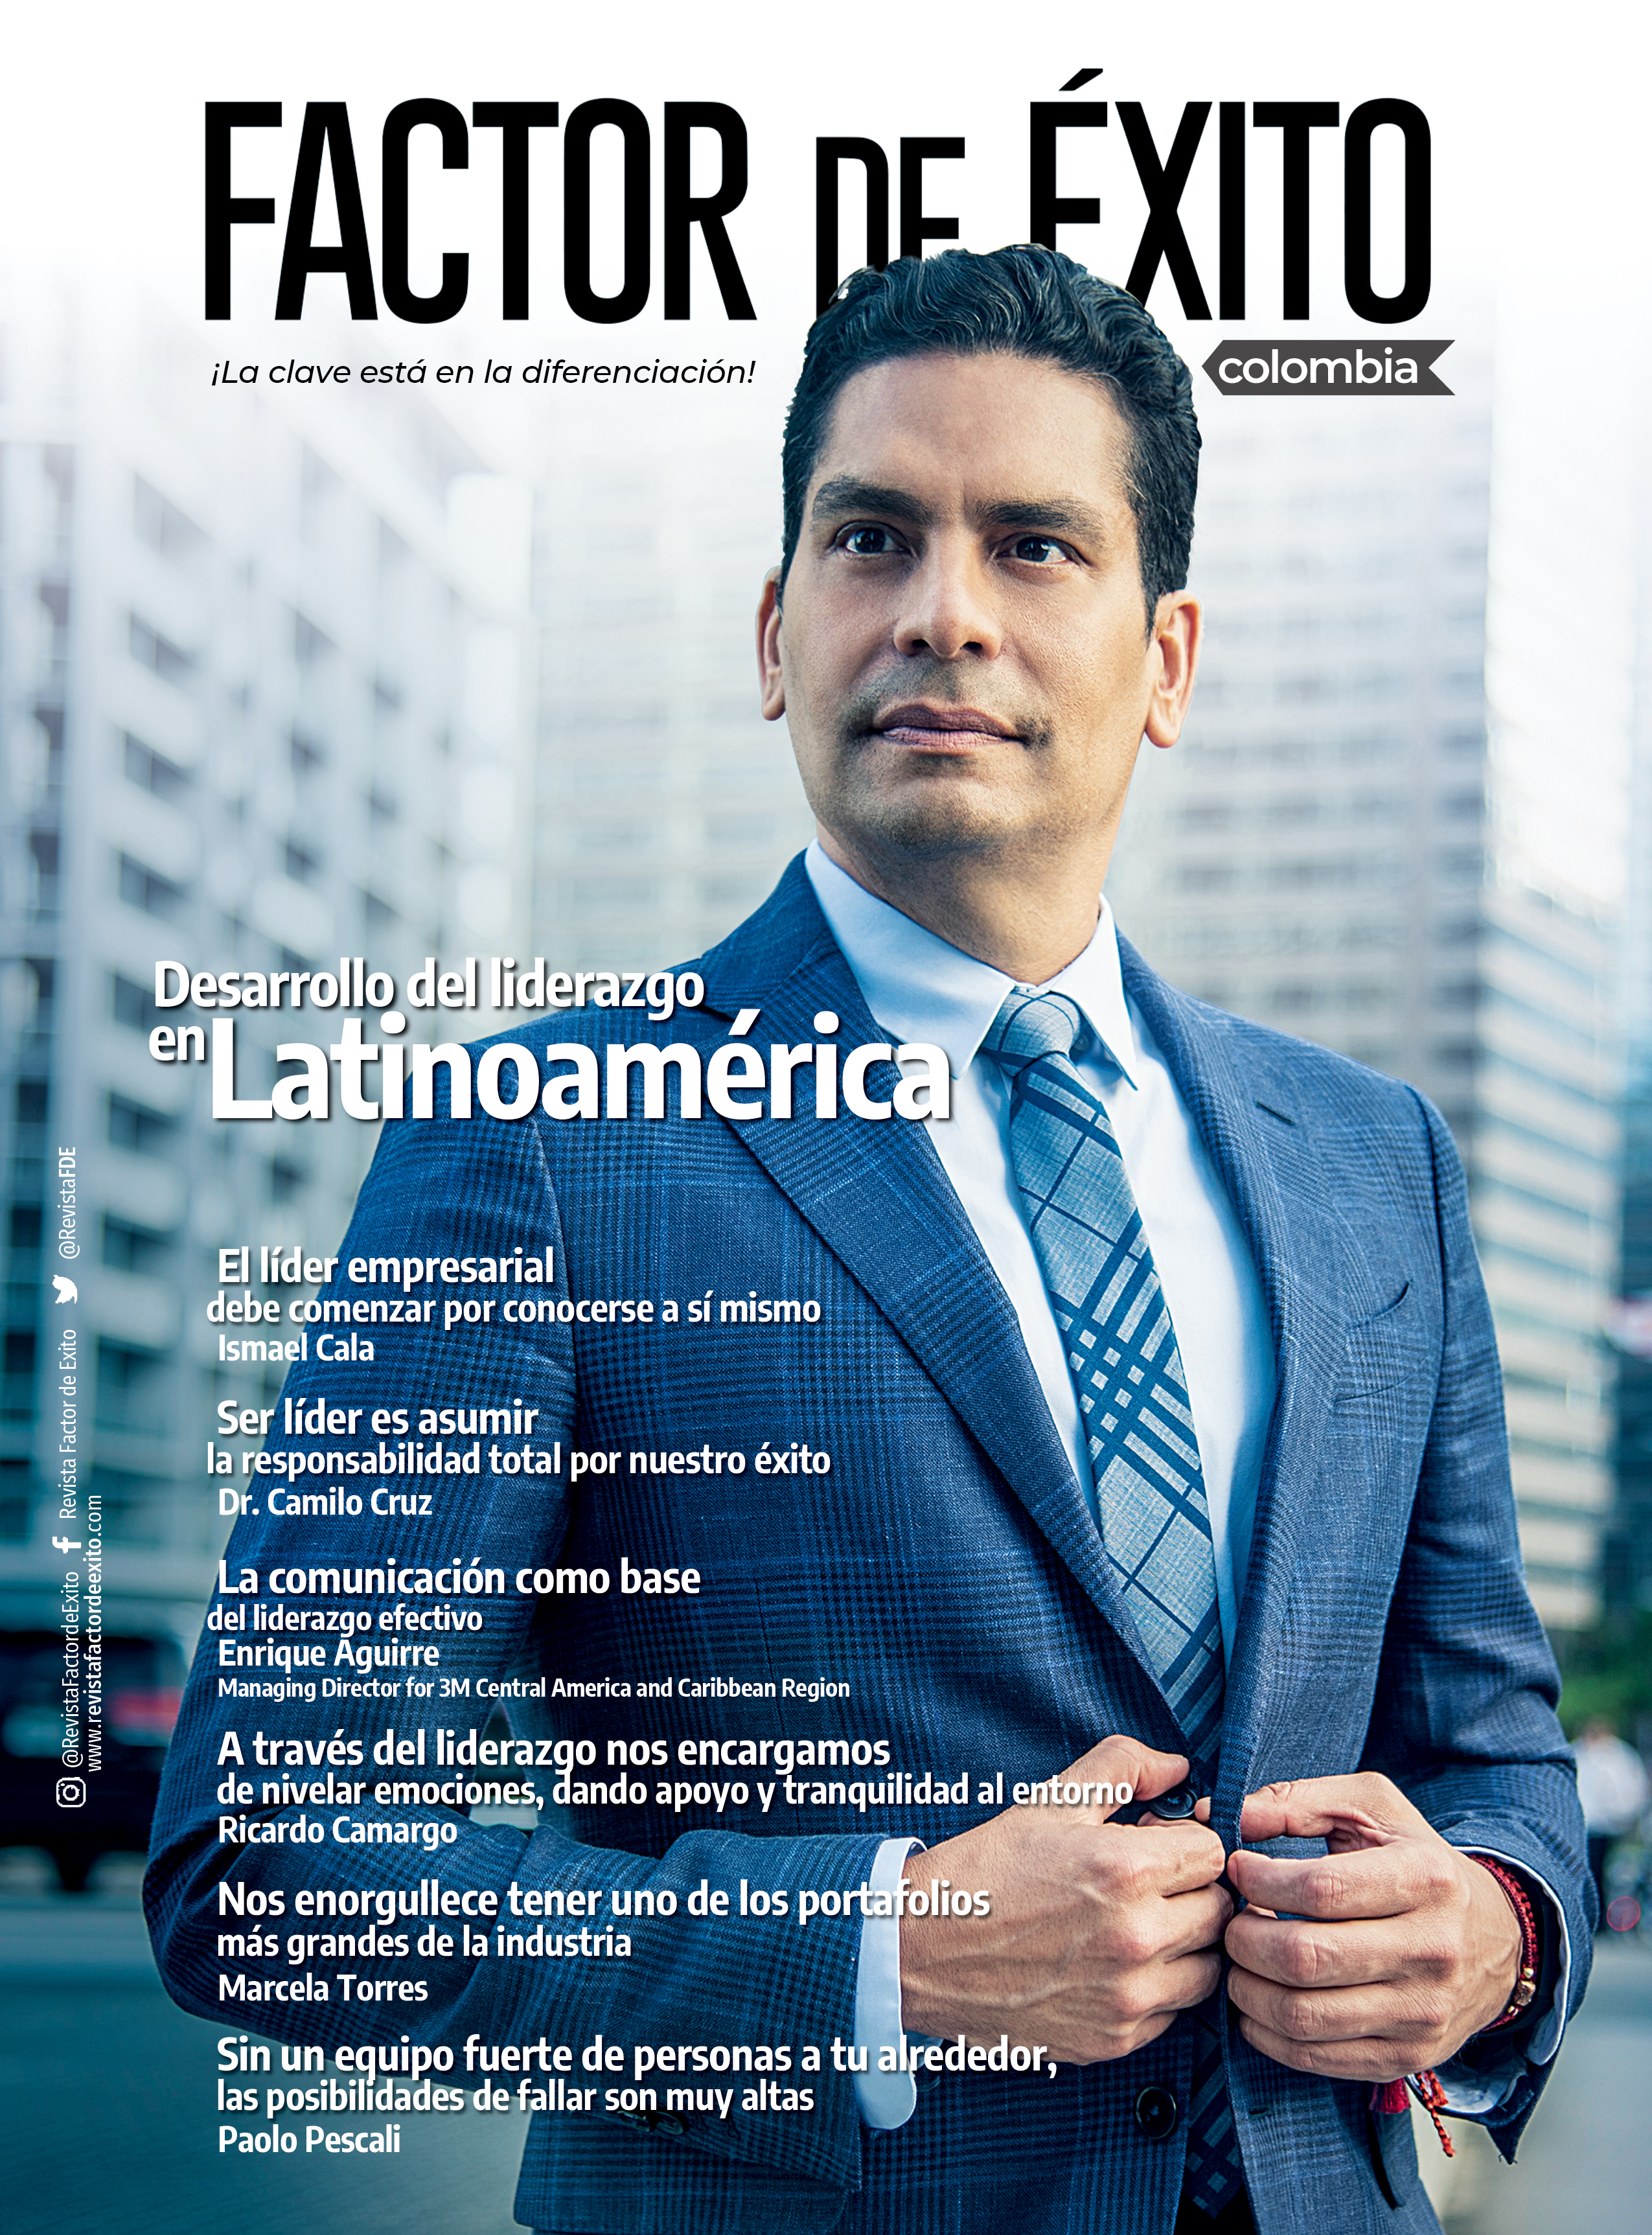 COLOMBIA edición #1 Revista Factor de Éxito